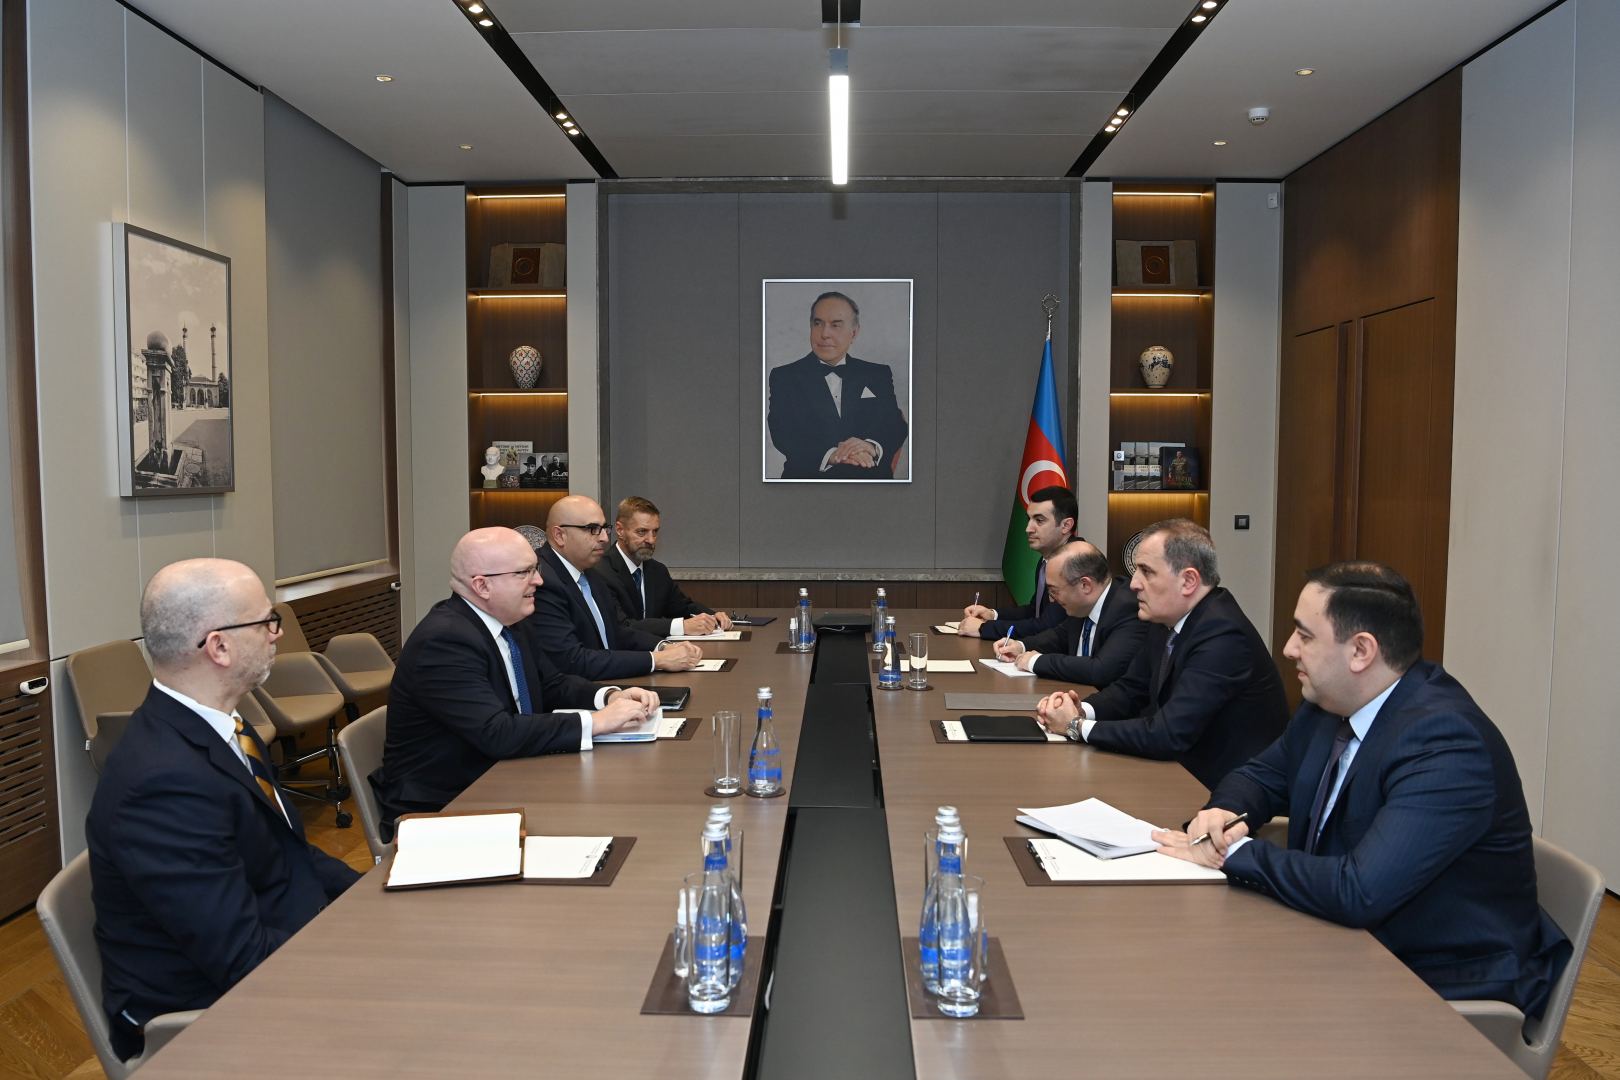 Джейхун Байрамов и Филип Рикер обсудили процесс нормализации азербайджано-армянских отношений (ФОТО)